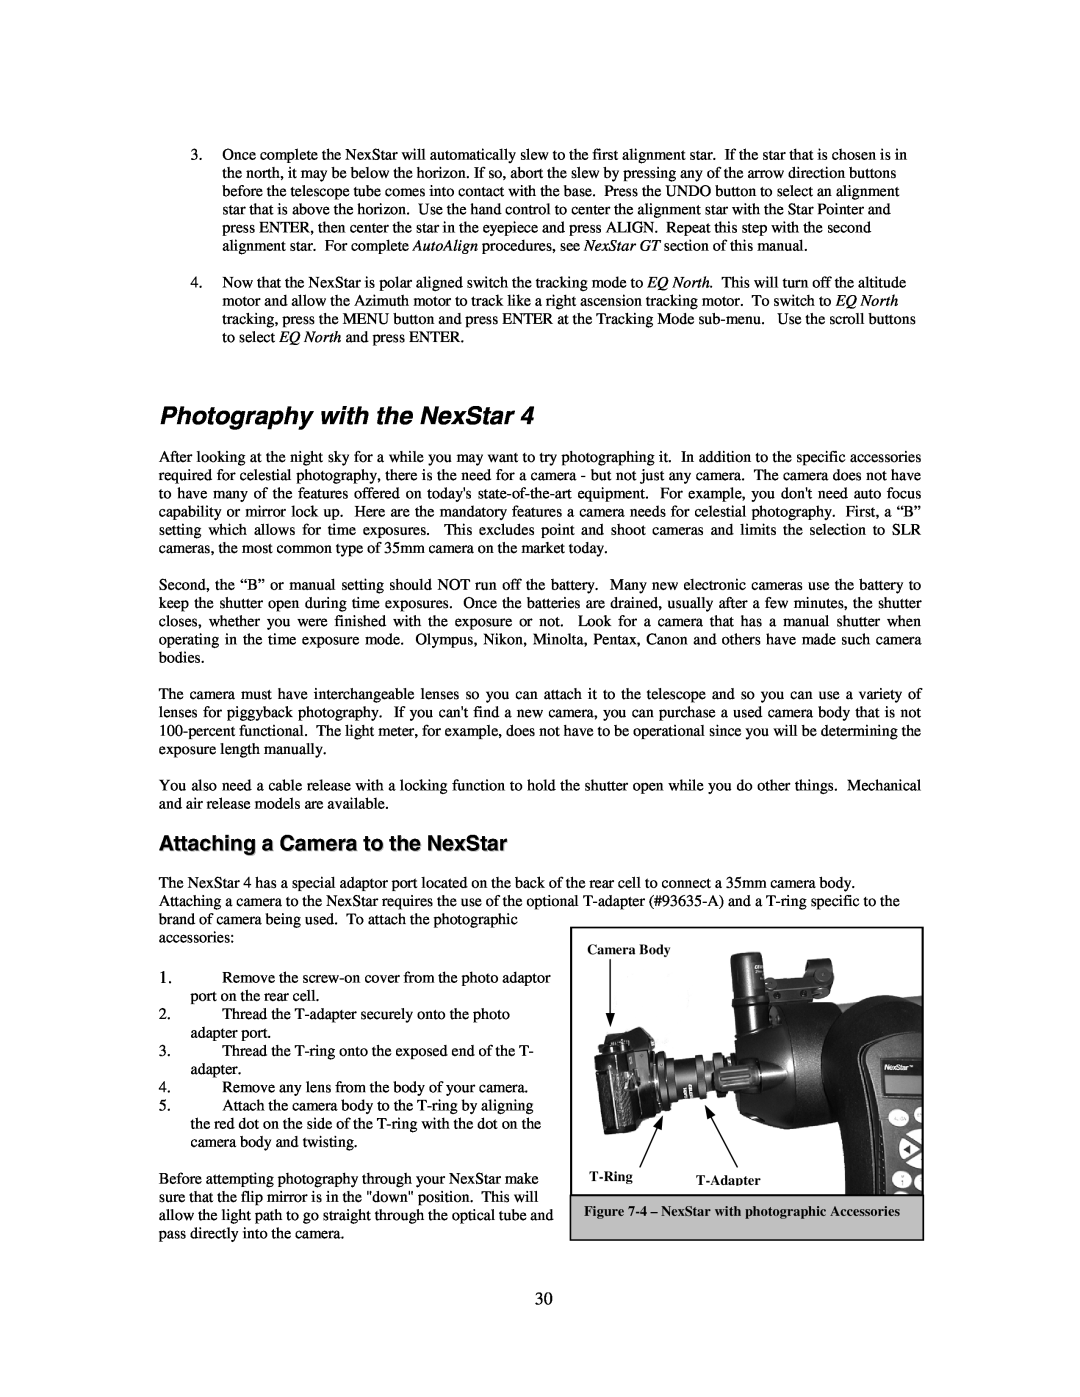 Celestron NexStar HC manual Photography with the NexStar, Attaching a Camera to the NexStar 